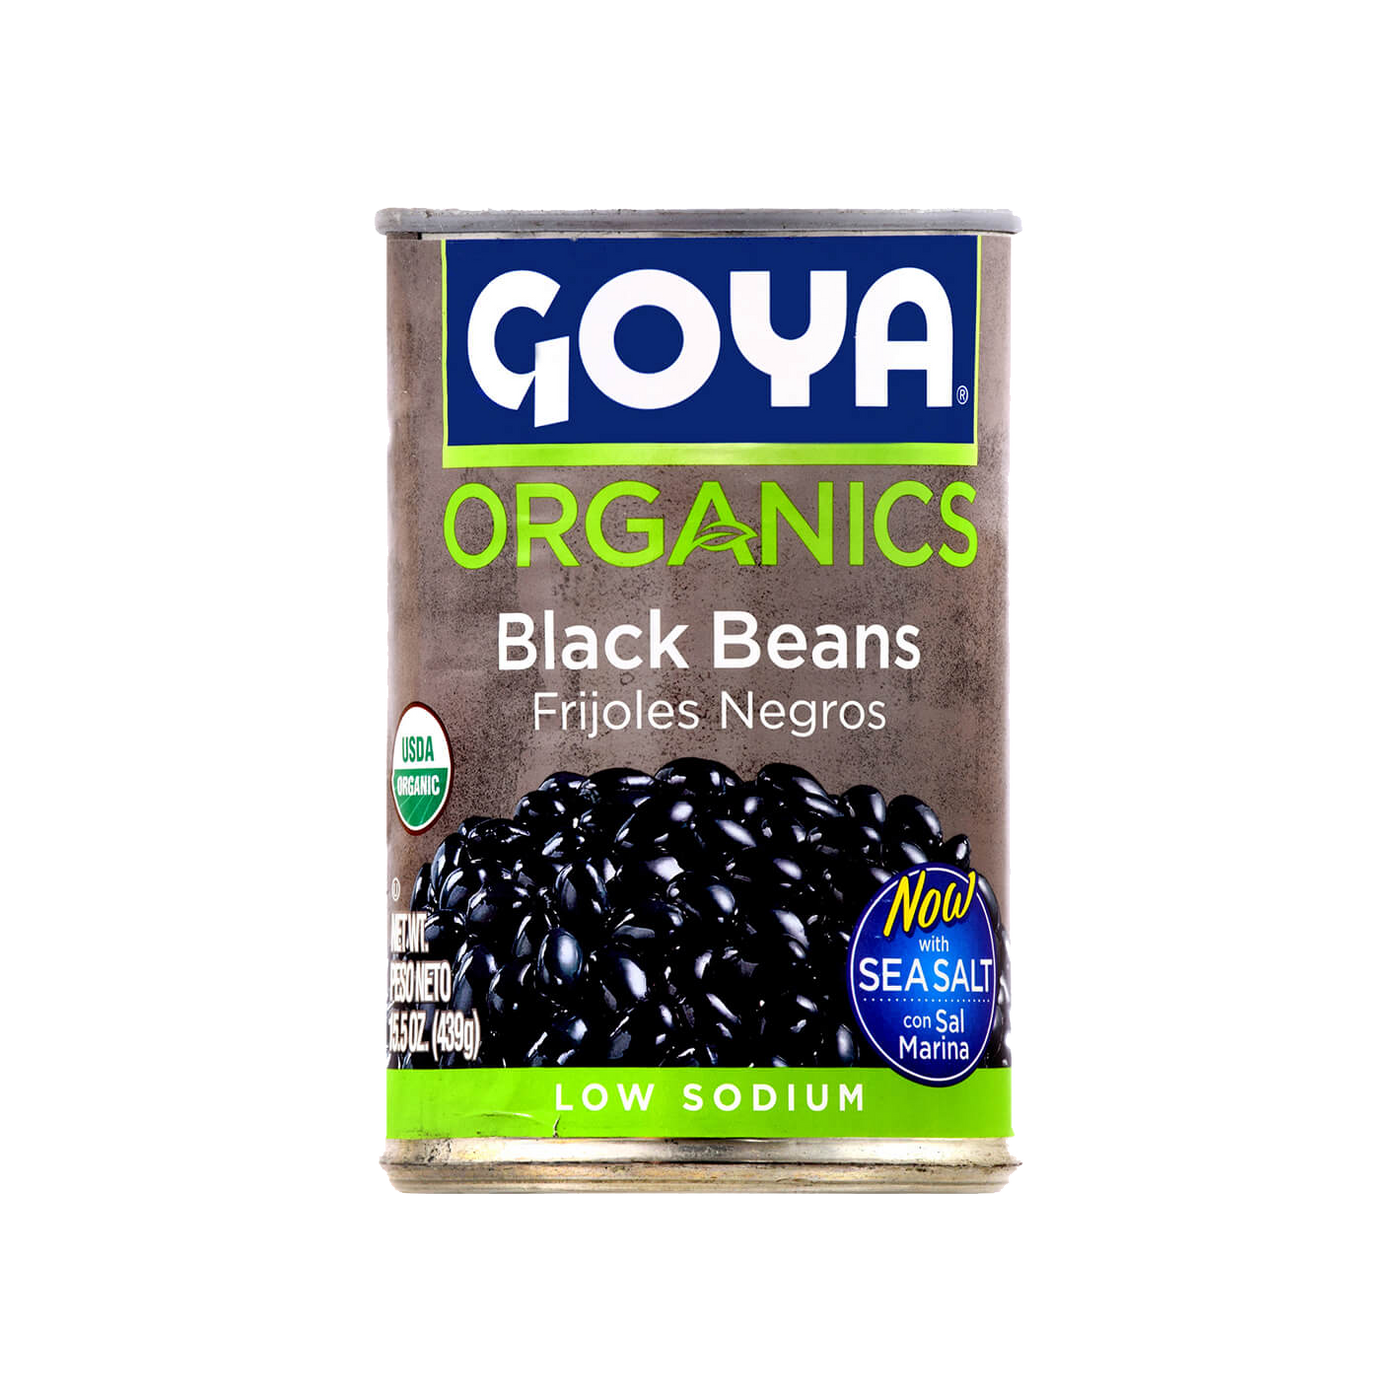   Goya Organic Black Beans